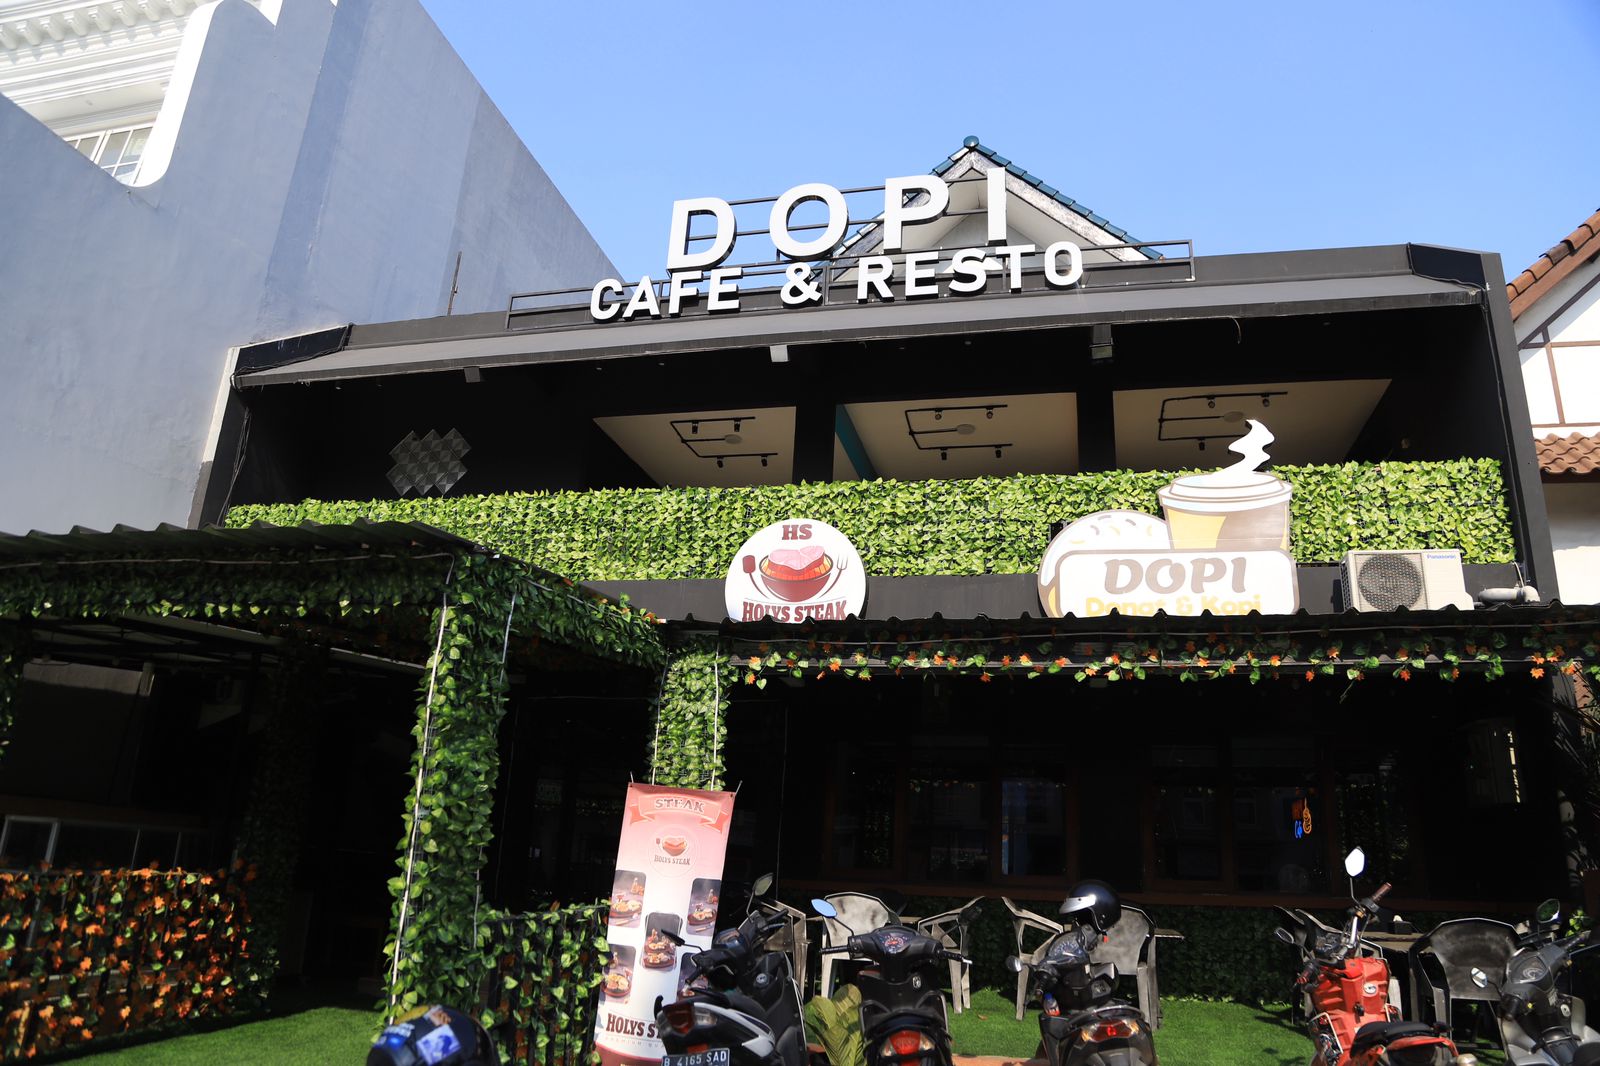 dopi-cafe-tempat-nongkrong-family-friendly-di-kota-tangerang